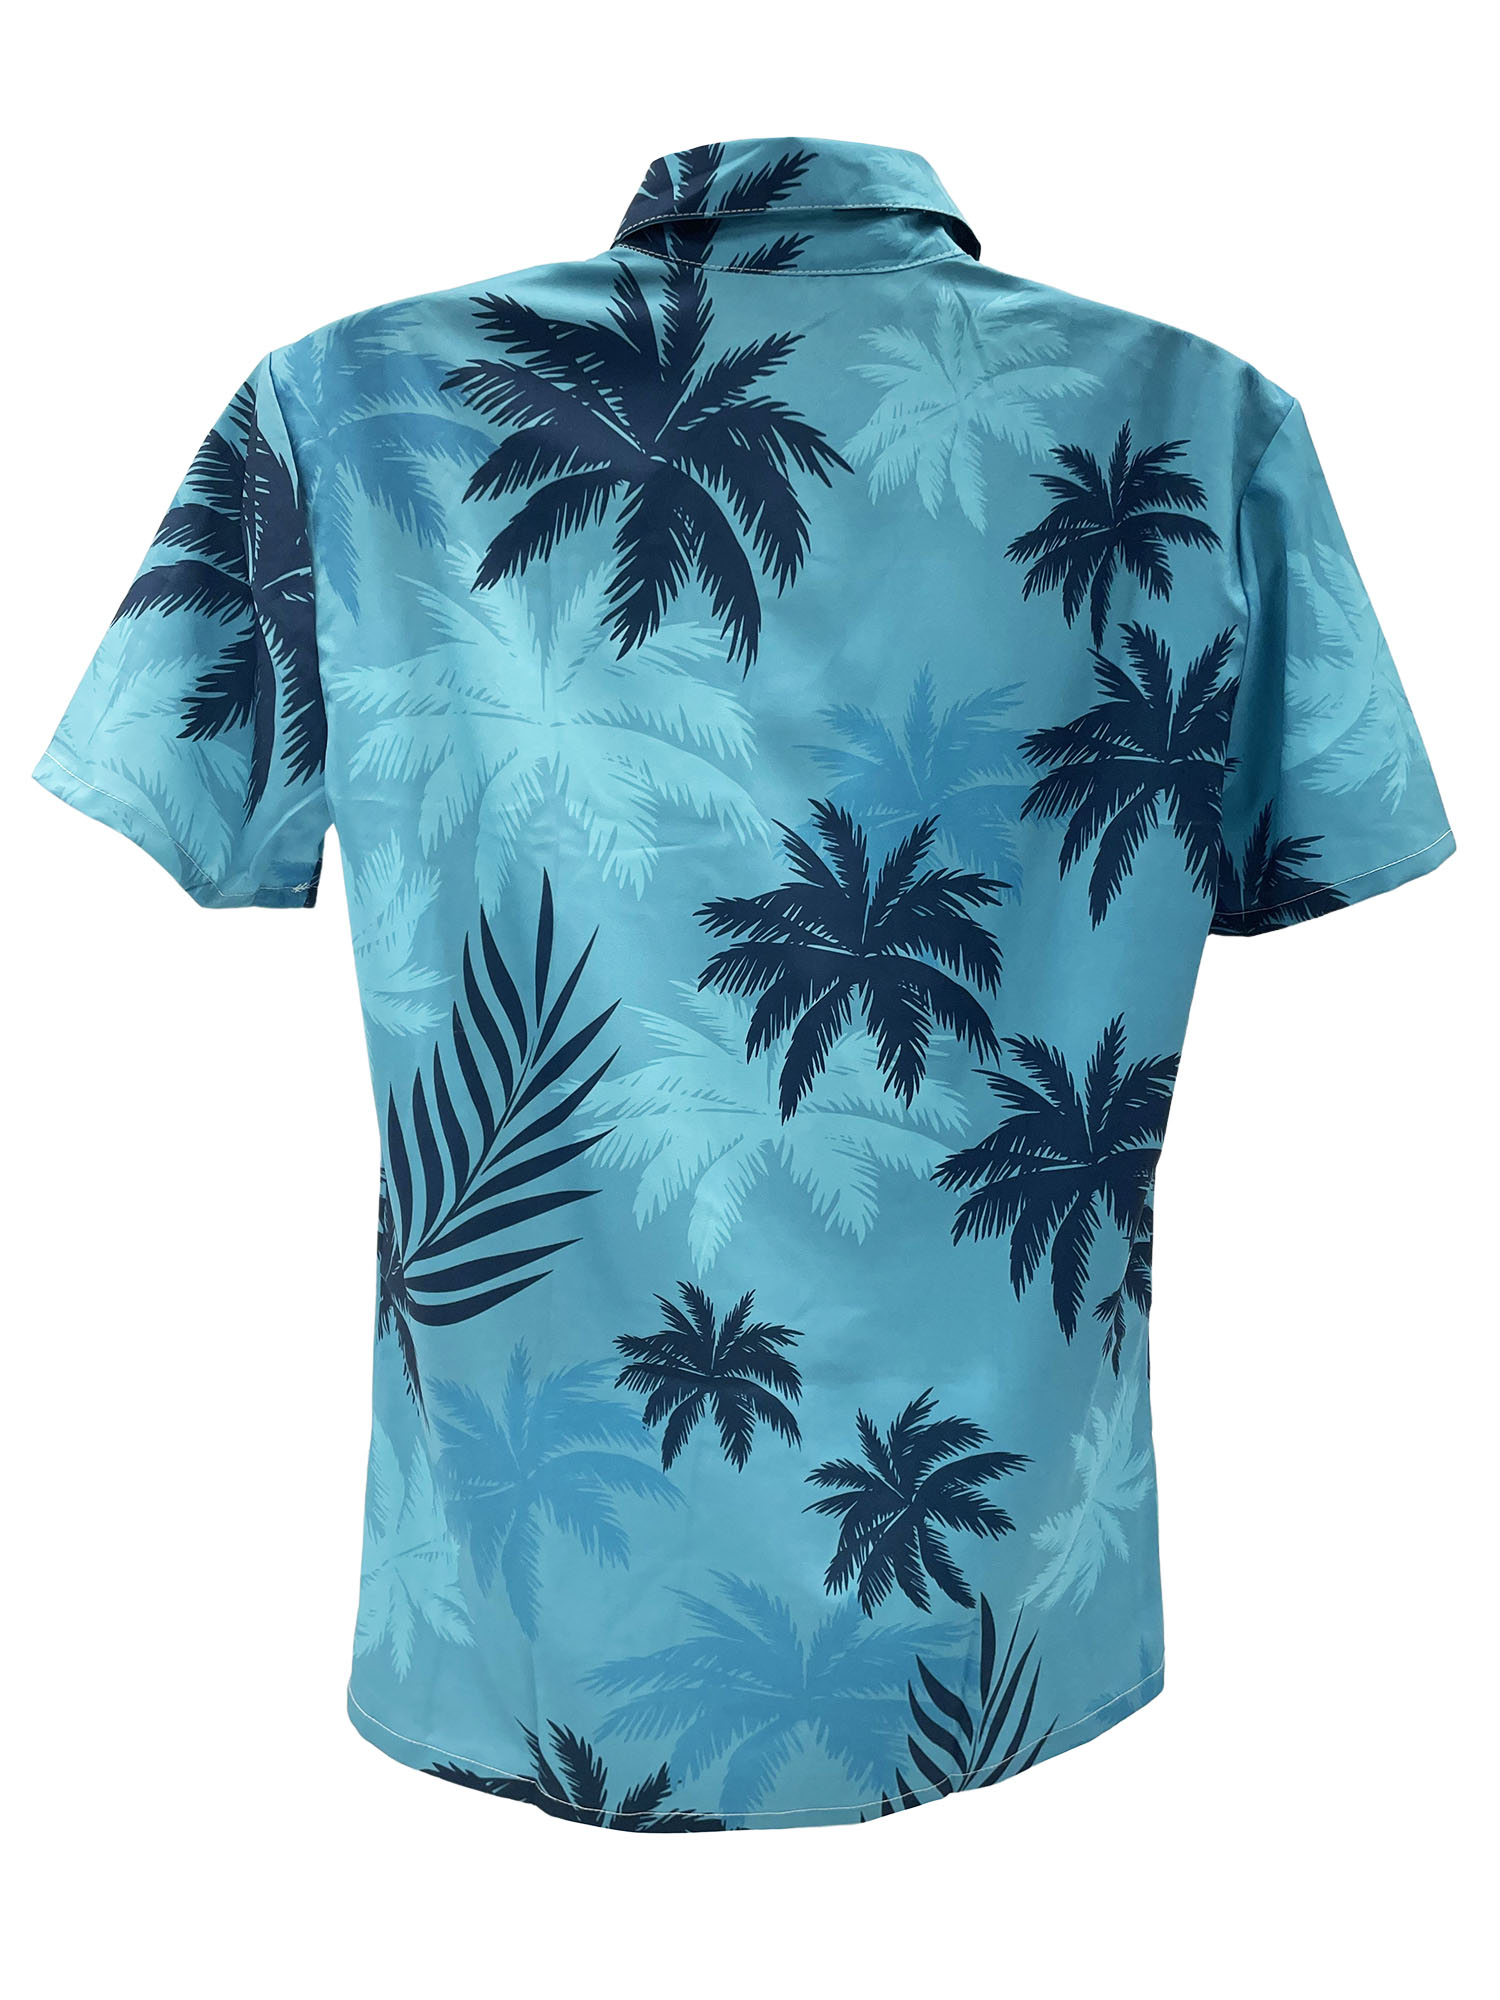 Tommy Vercetti Grand Theft Auto Vice City Costume Palm Trees Hawaiian Shirt